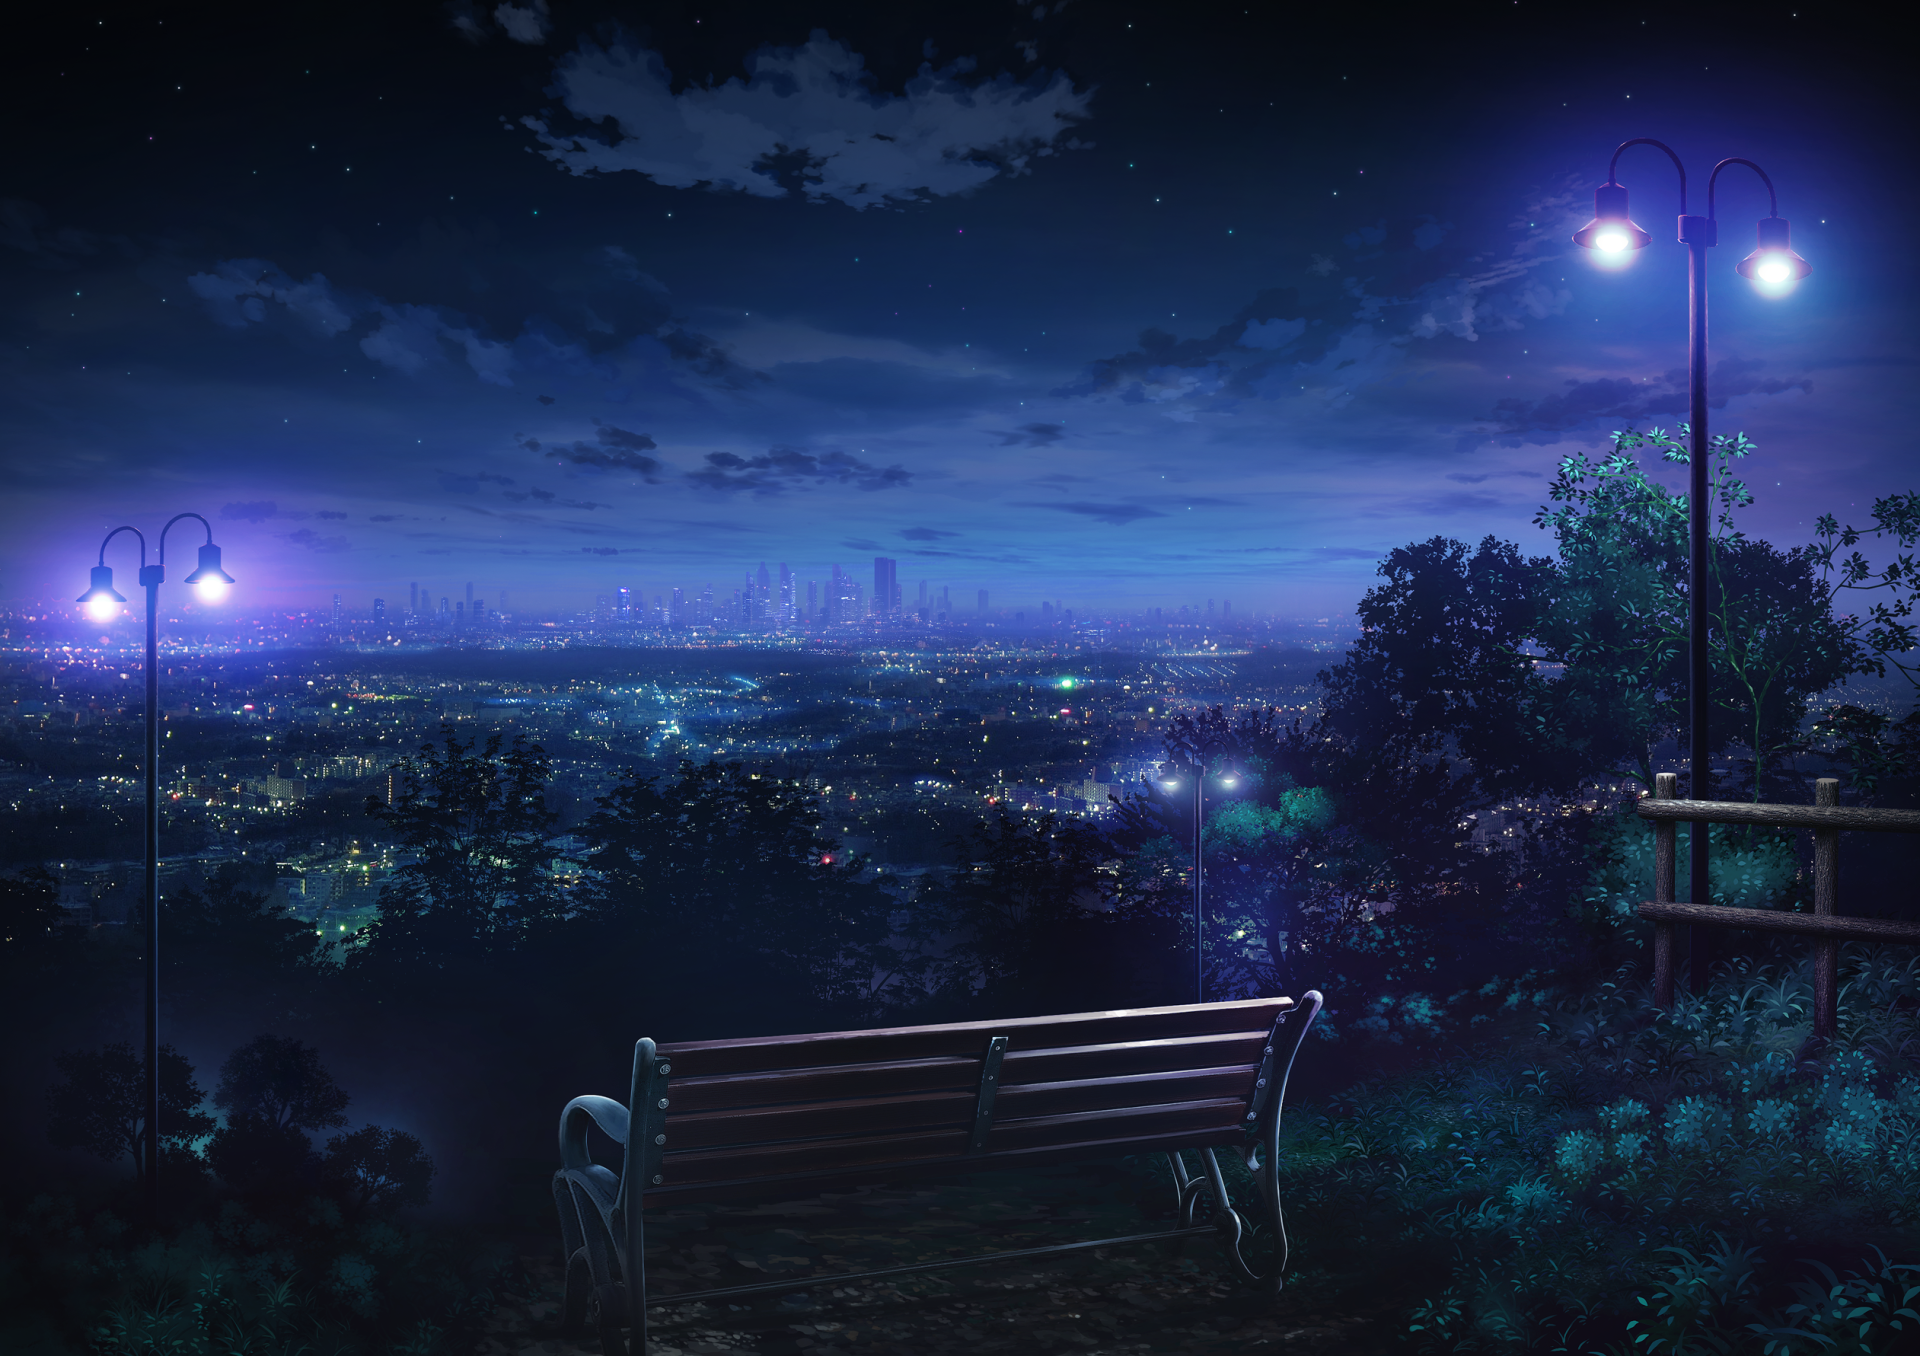 View of City at Night by monorisu